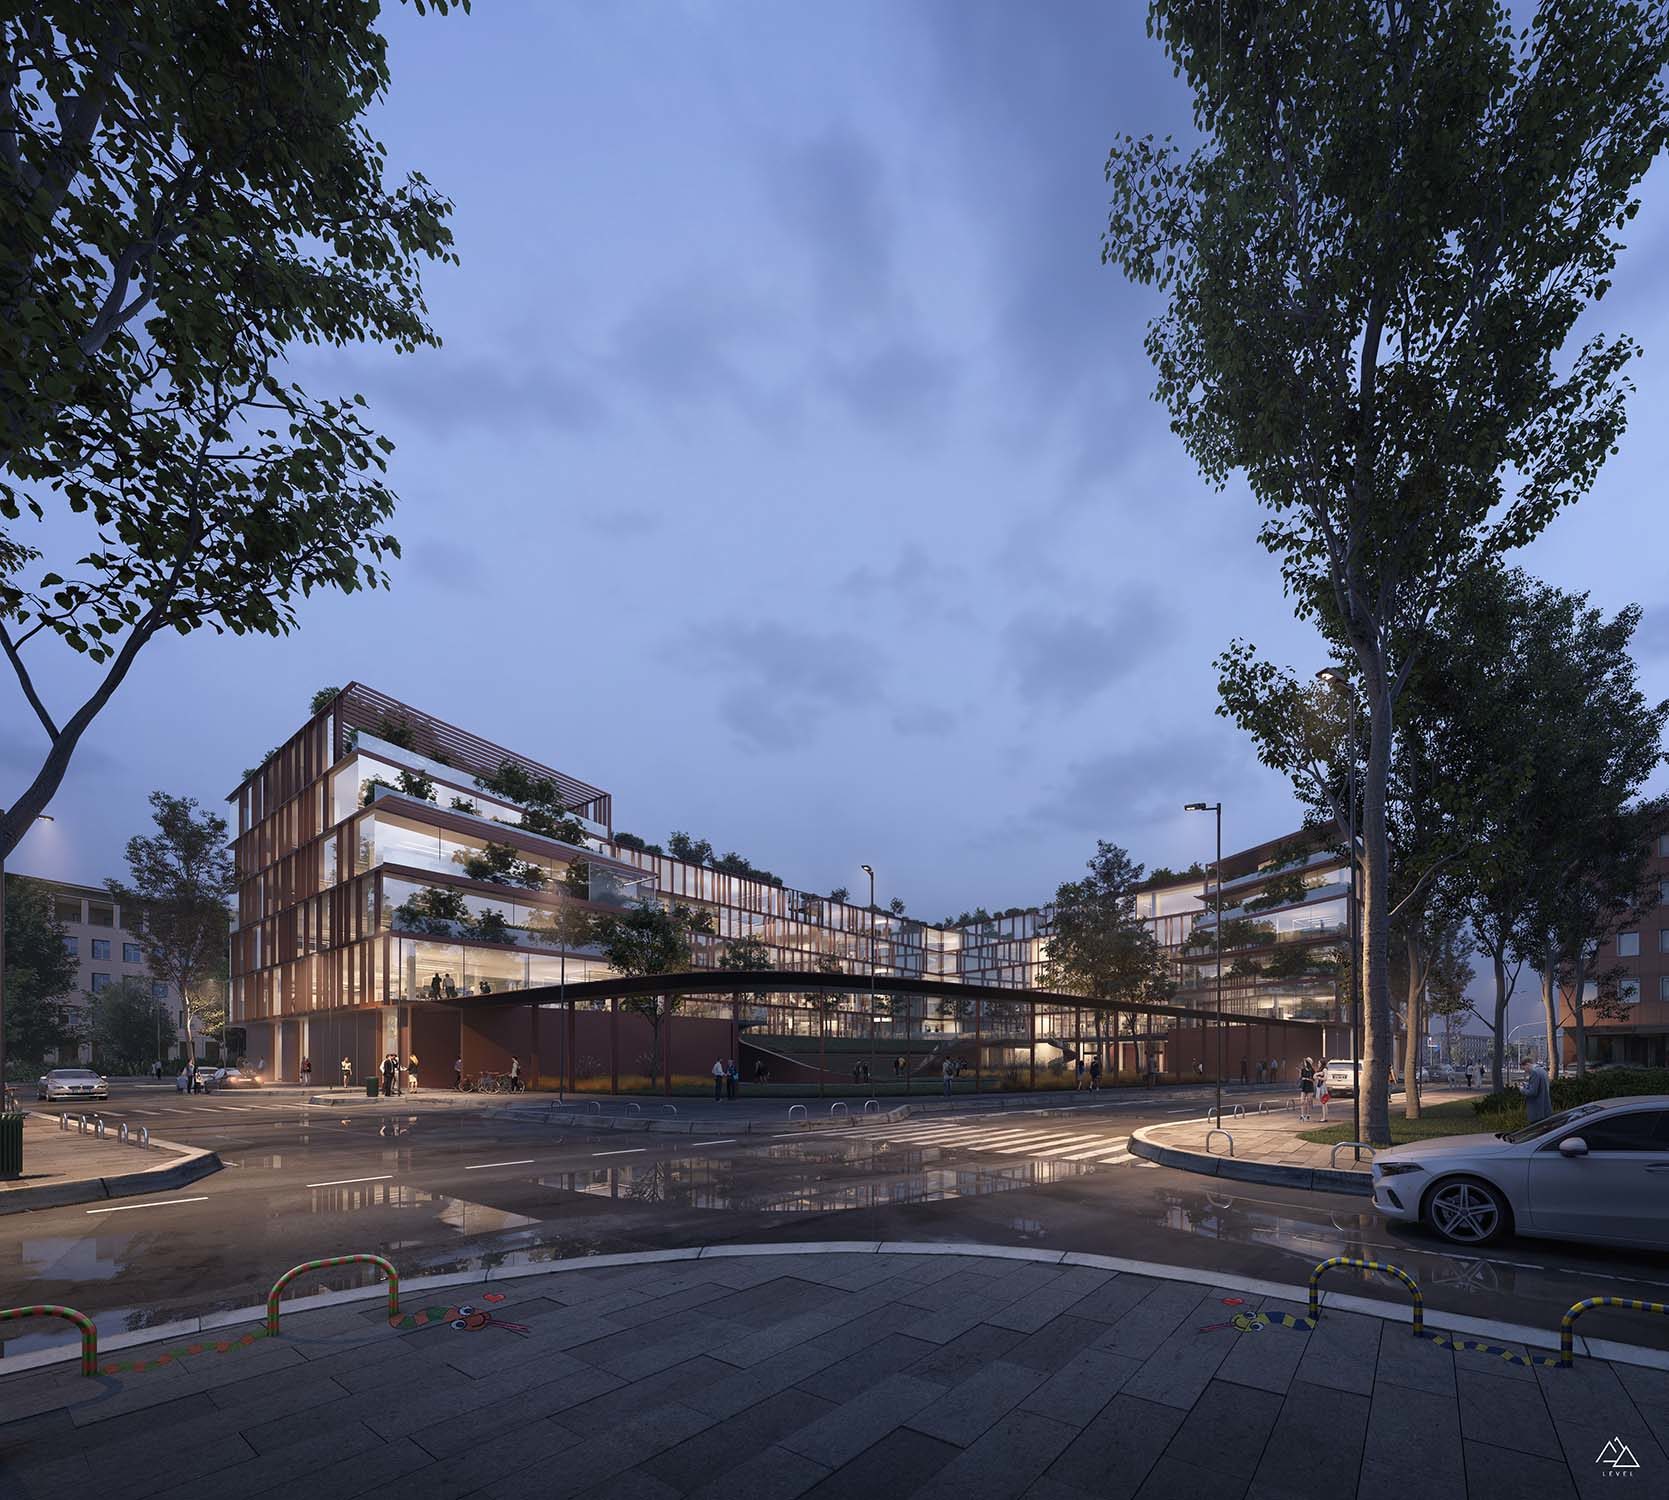 New Findomestic headquarters in Florence – Genius Loci Architettura, 2019